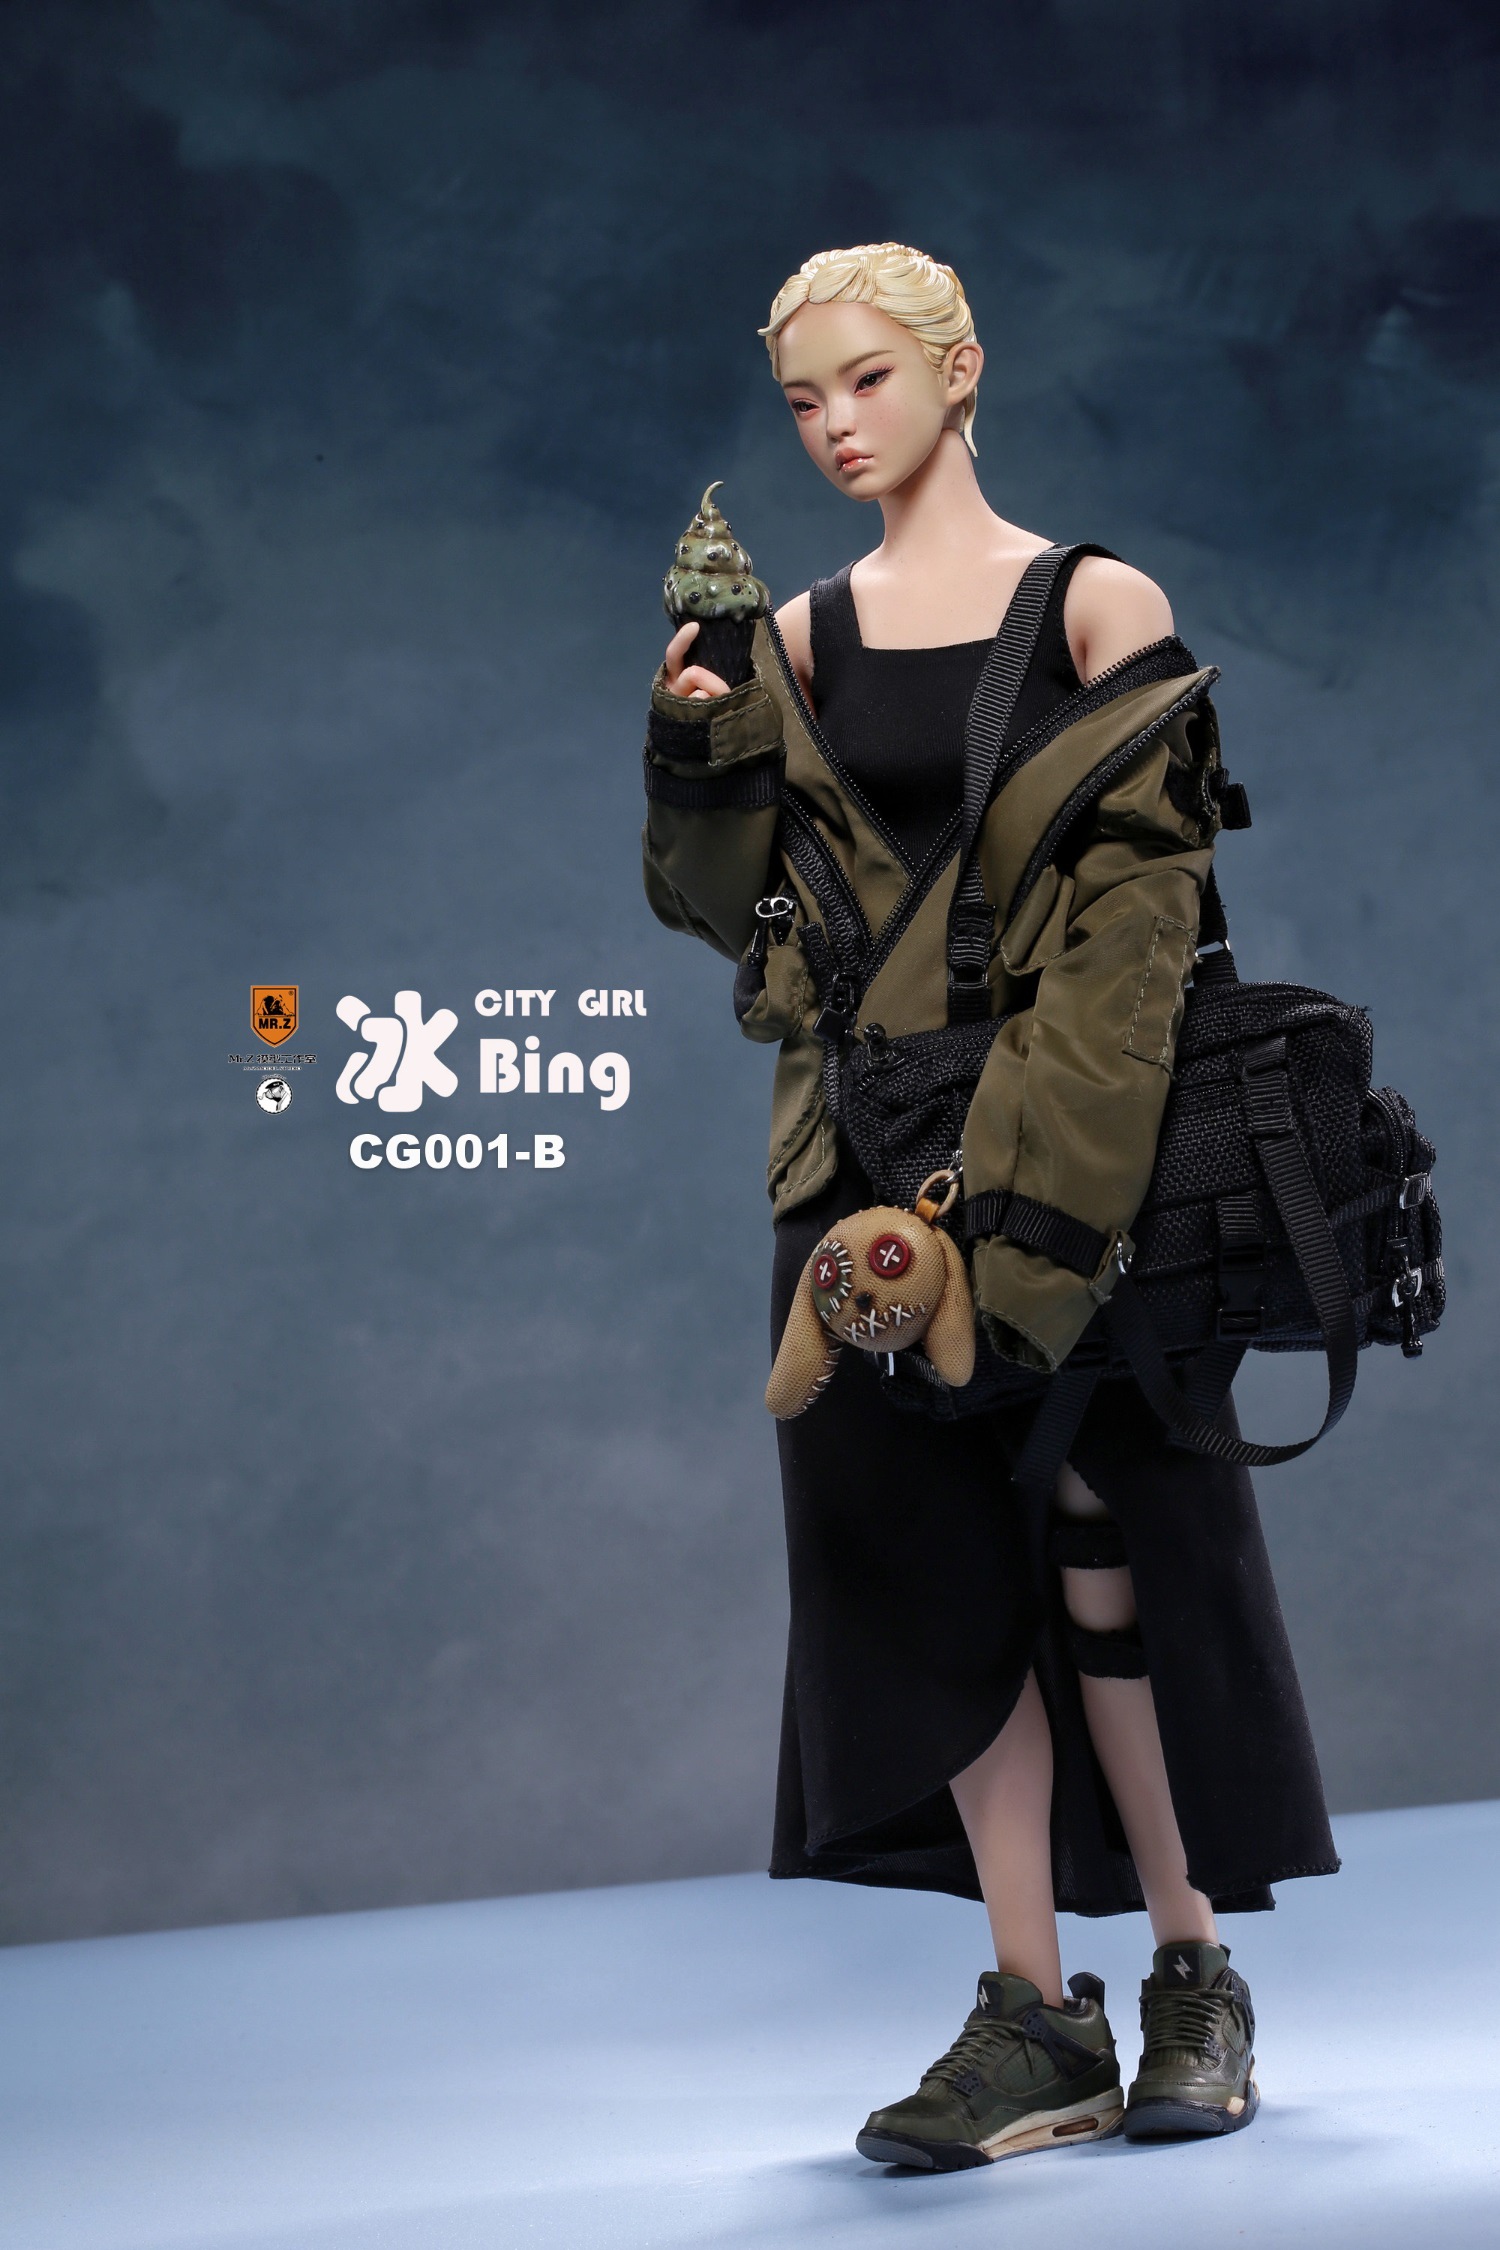 NEW PRODUCT: Mr.Z model studio - city series first urban girl Mu & Bing #CG001-A/B 04125